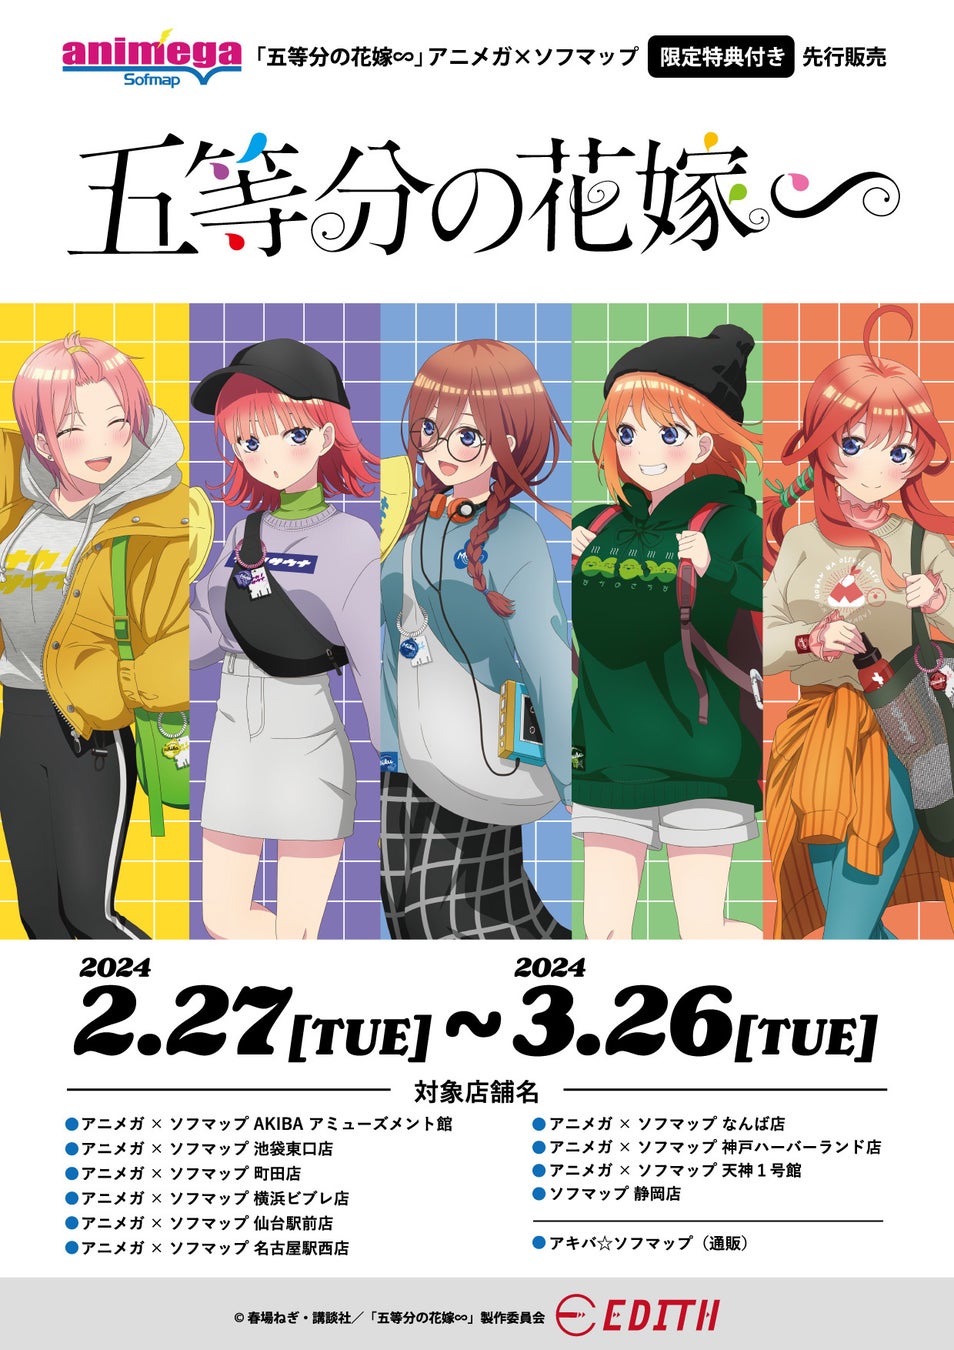 TVスペシャルアニメ「五等分の花嫁∽」のオリジナルイラストを使用したグッズがアニメガ×ソフマップで先行販売決定！